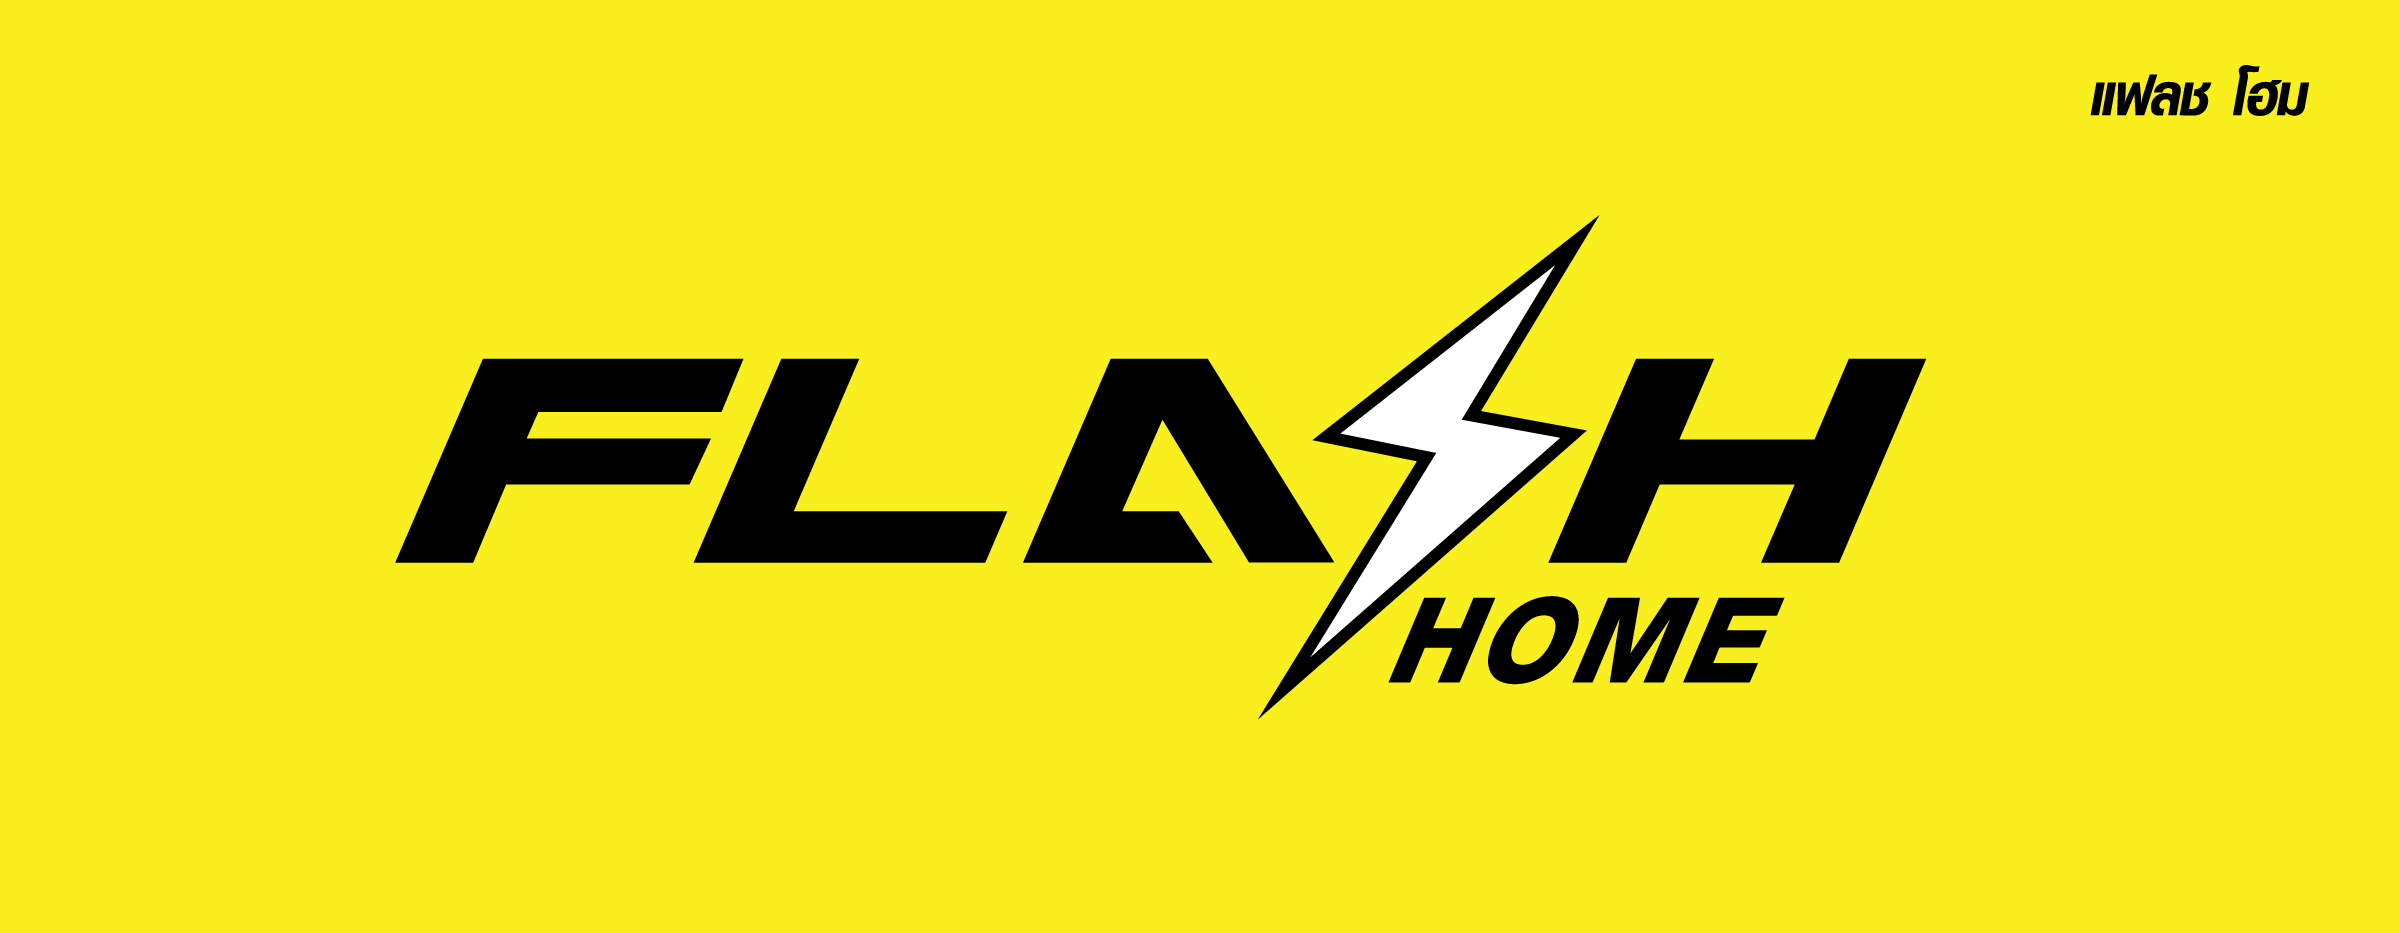 flash home logo